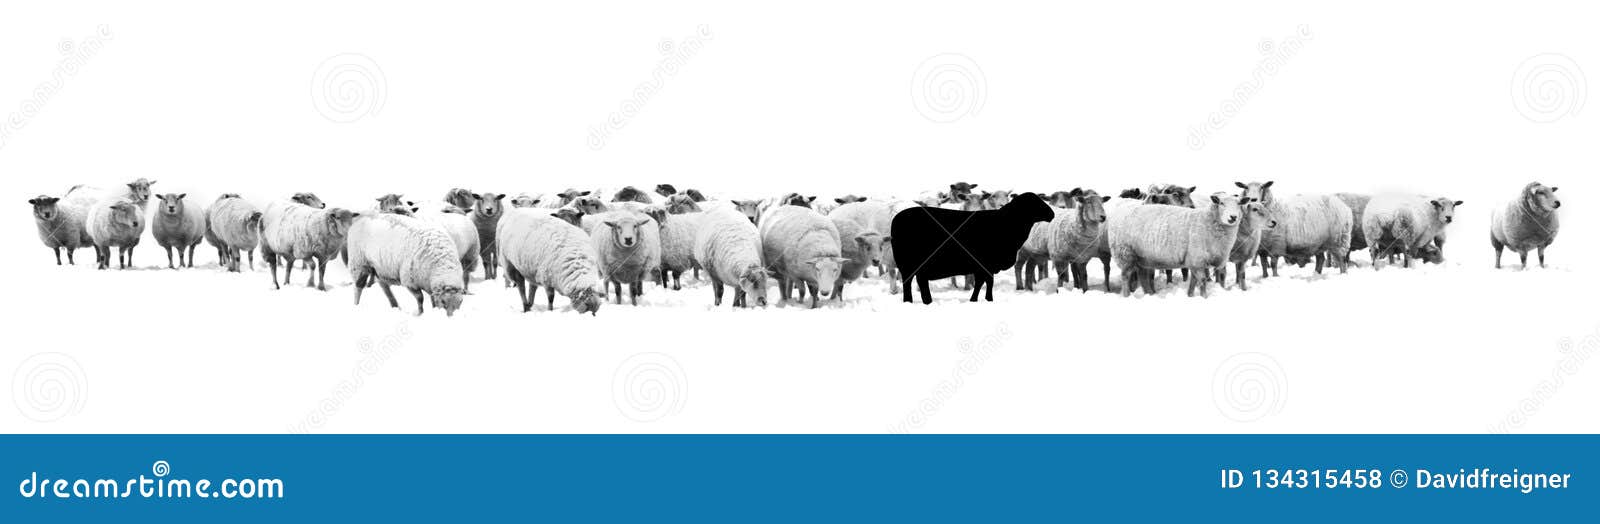 black and white 1 10th sheep